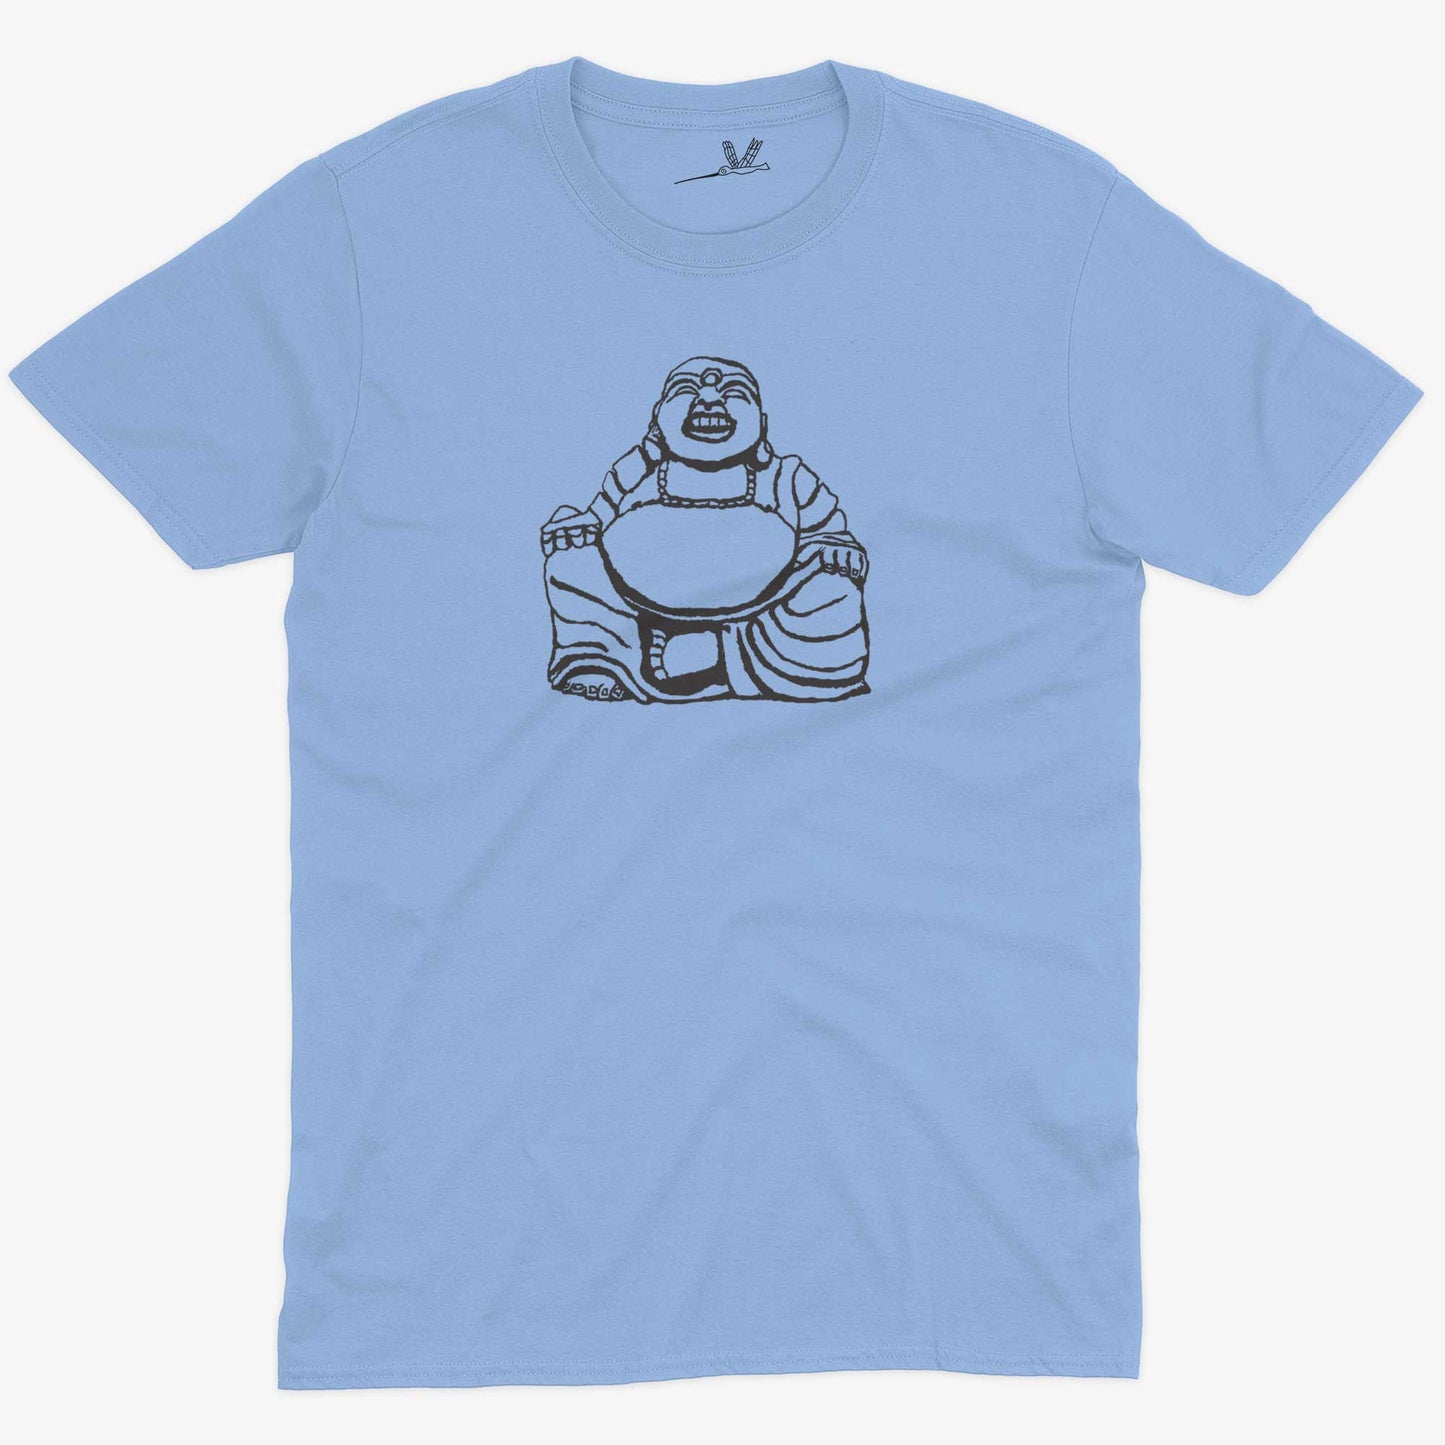 Laughing Buddha Unisex Or Women's Cotton T-shirt-Baby Blue-Unisex